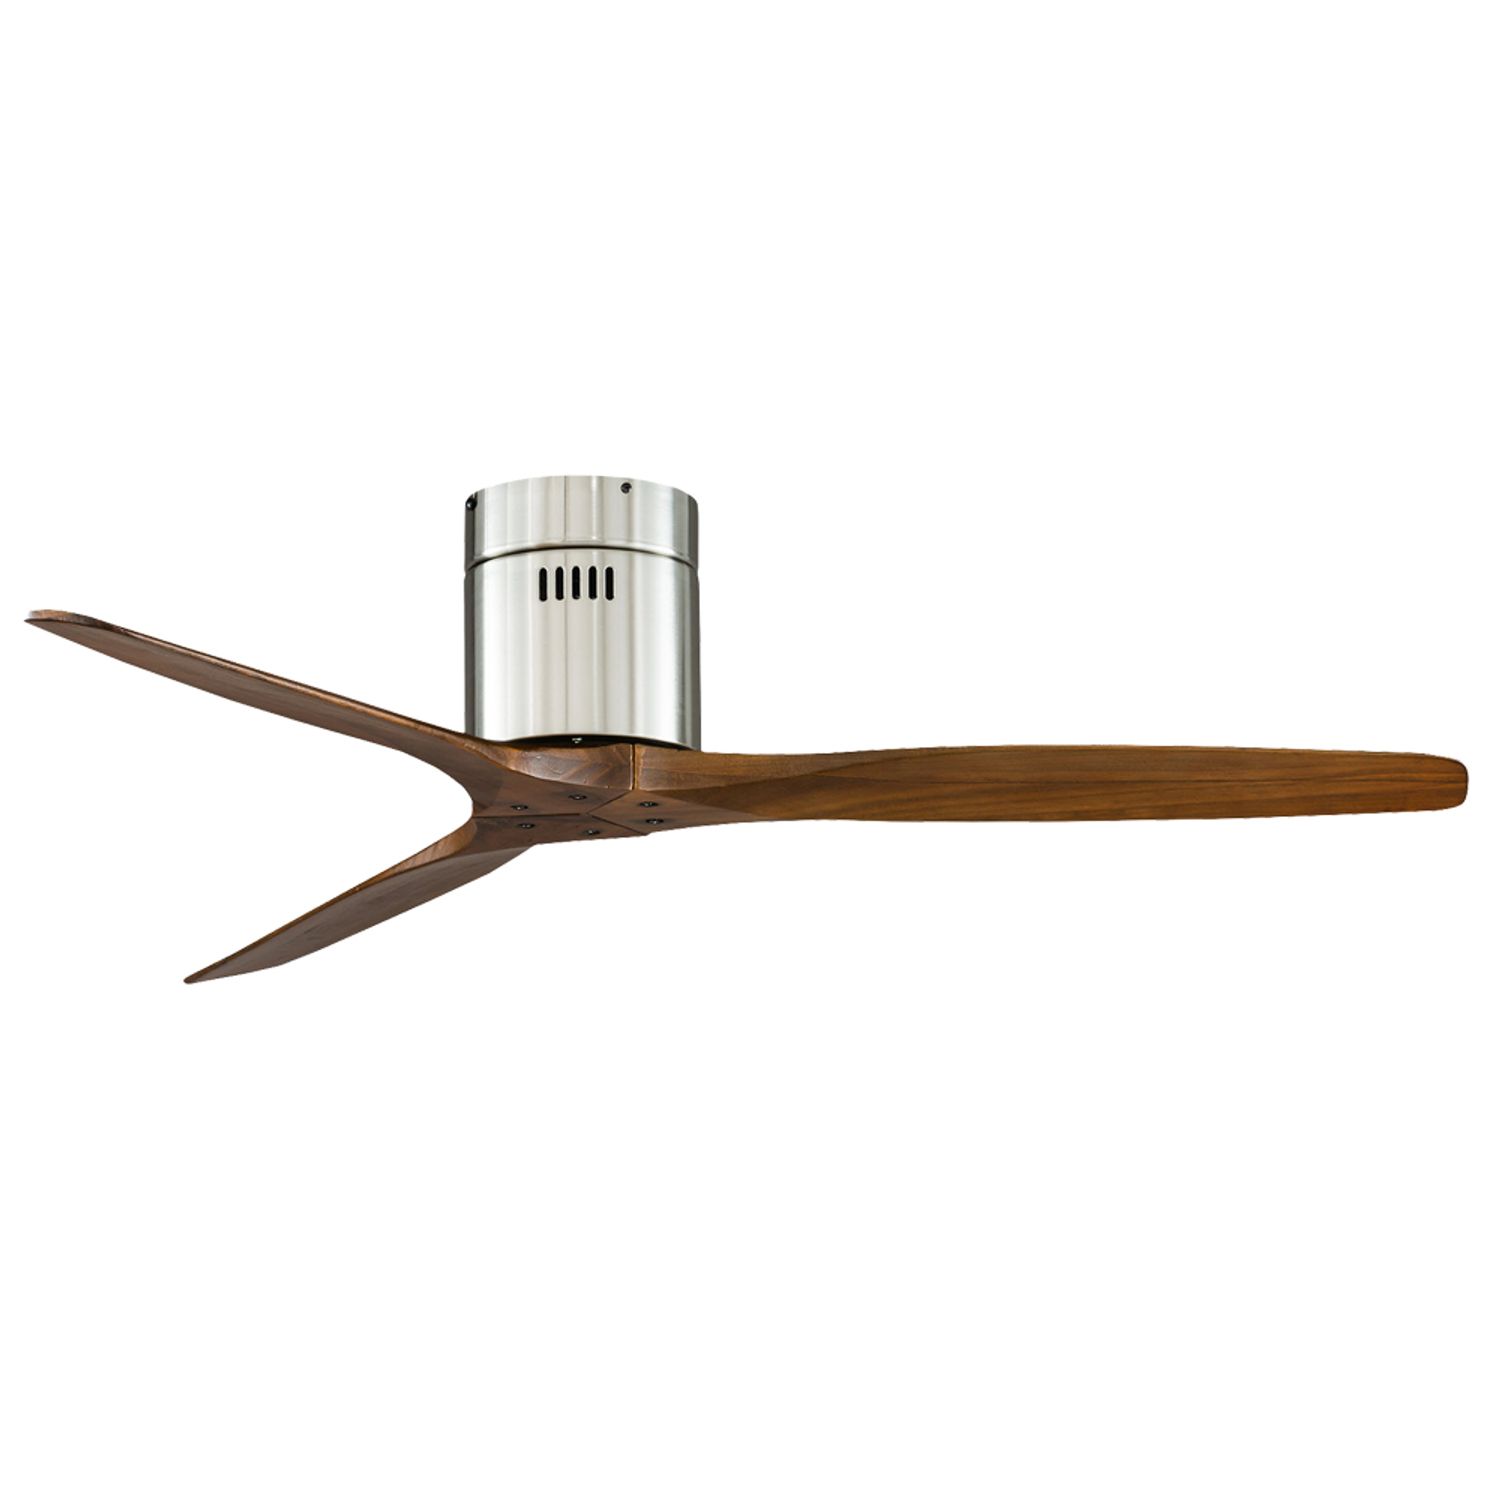 Brushed Nickel dark wood ceiling fan for wholesale